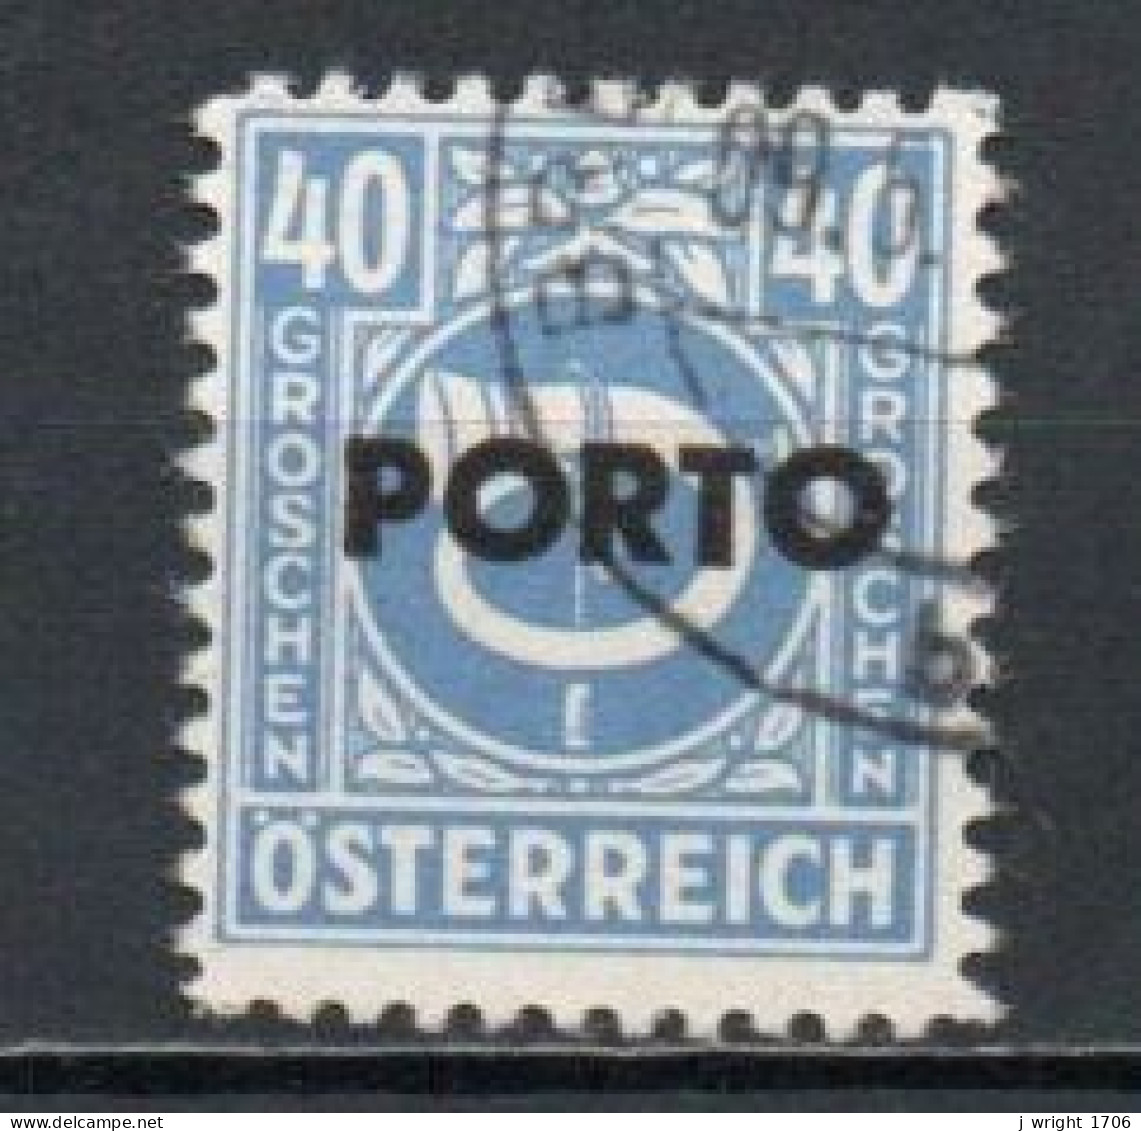 Austria, 1946, Posthorn Overprinted, 40g, CTO - Impuestos